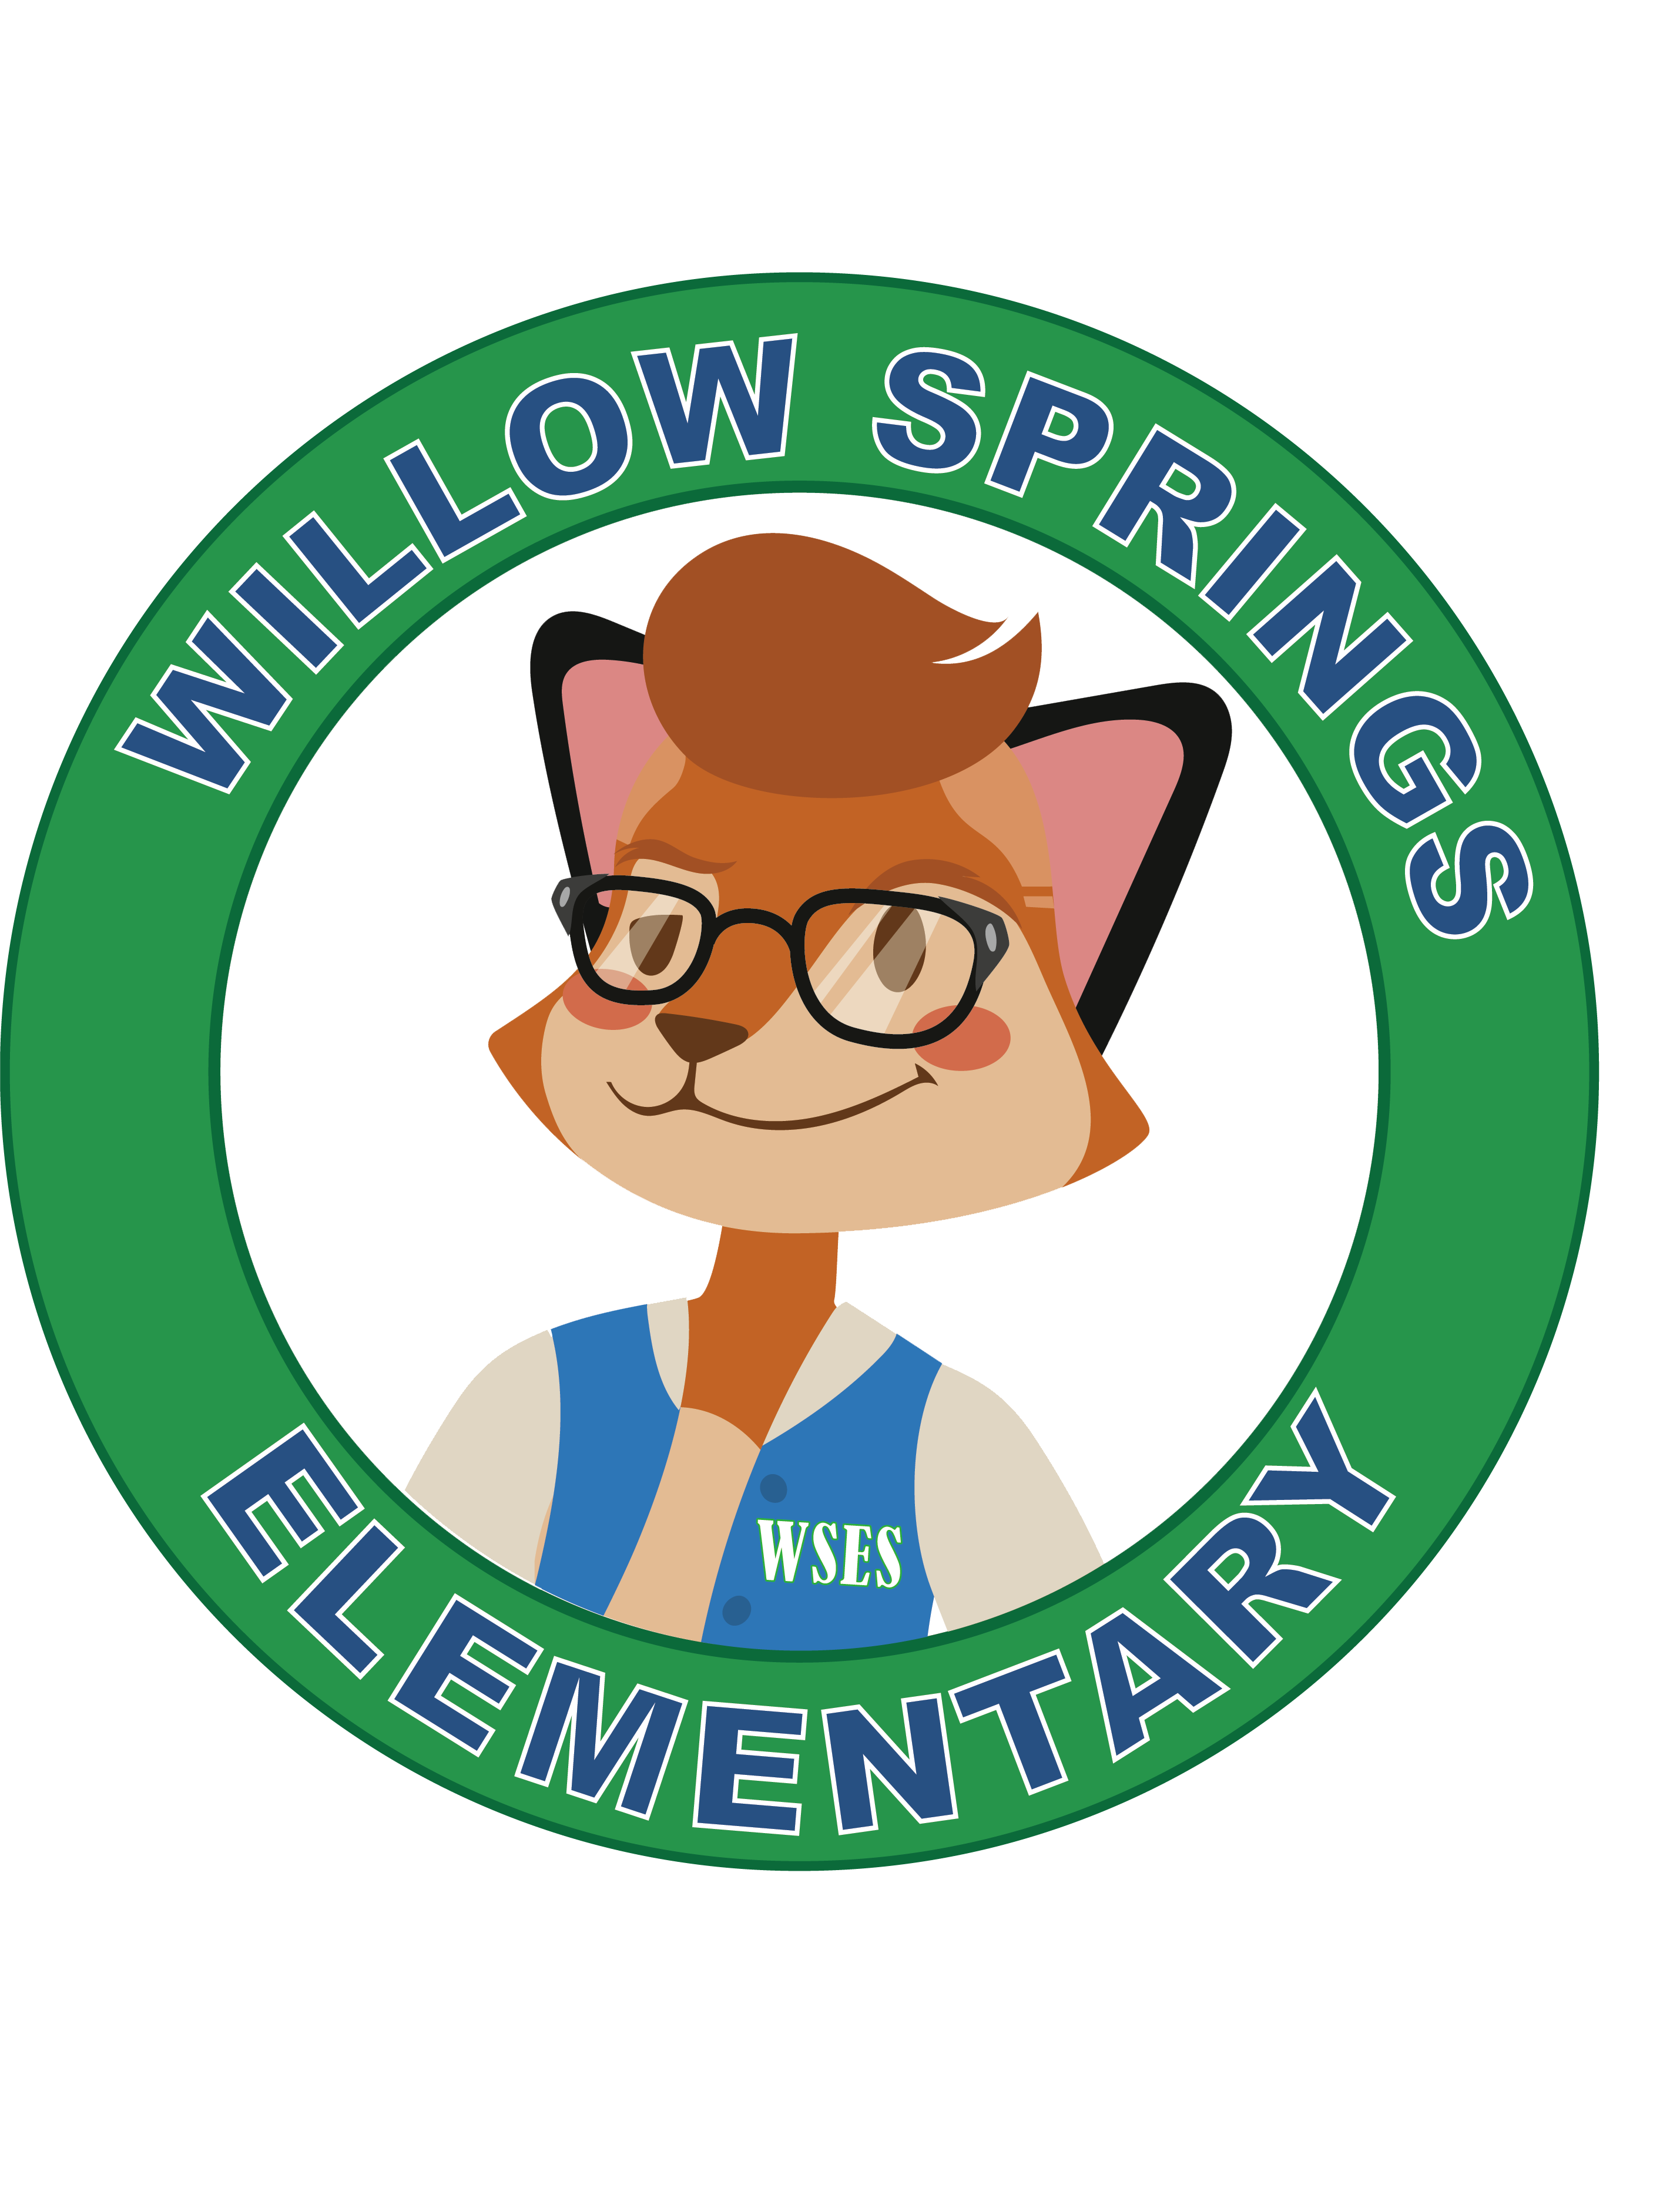 Willow Springs Elementary logo